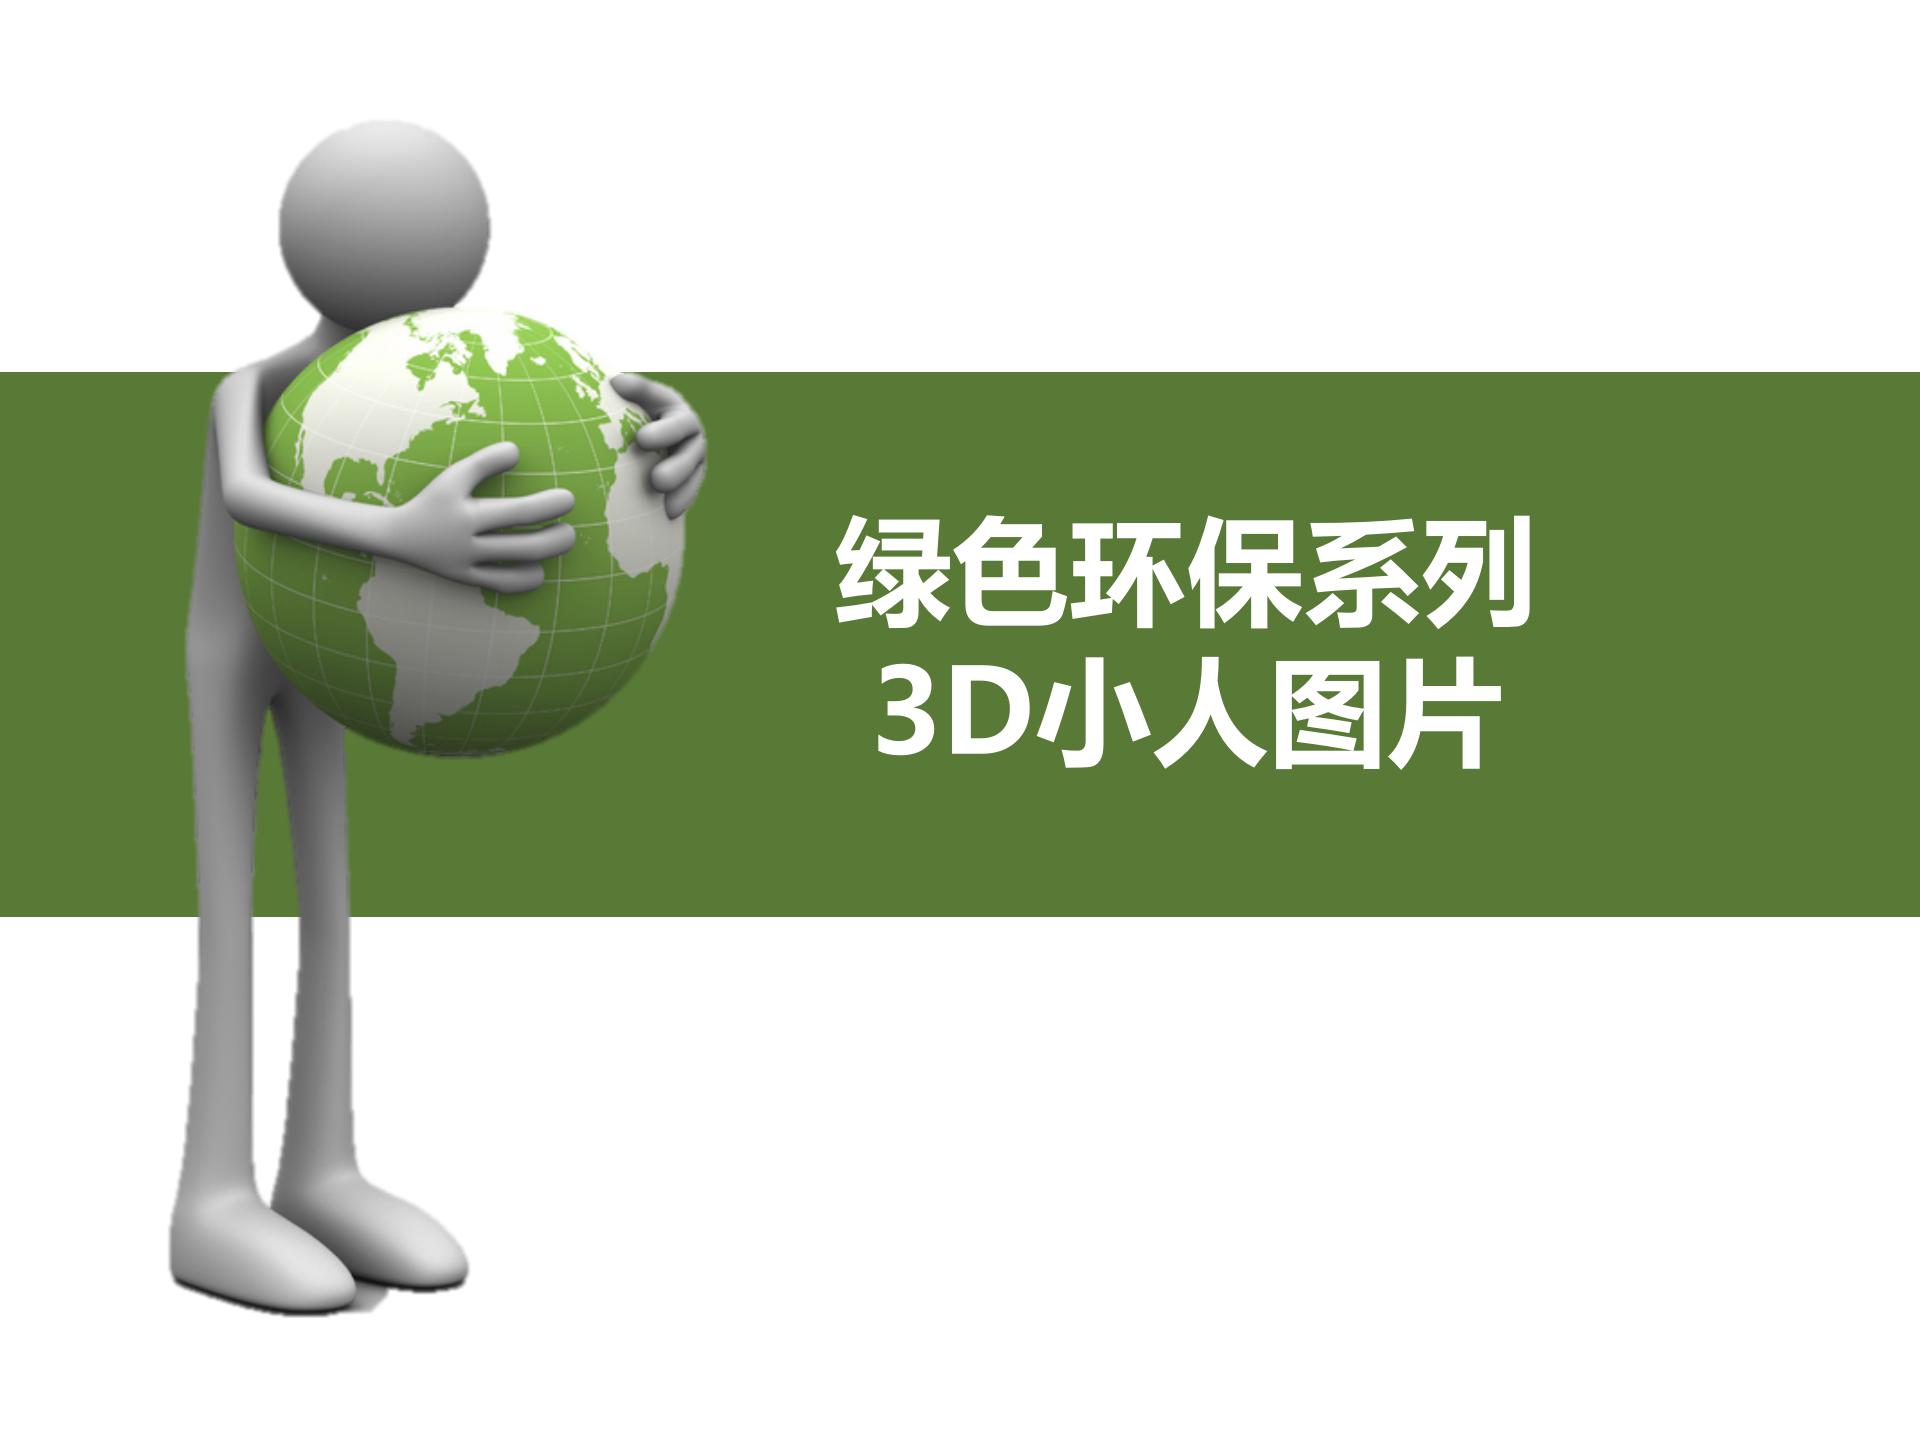 3D小人綠色環保PPT素材